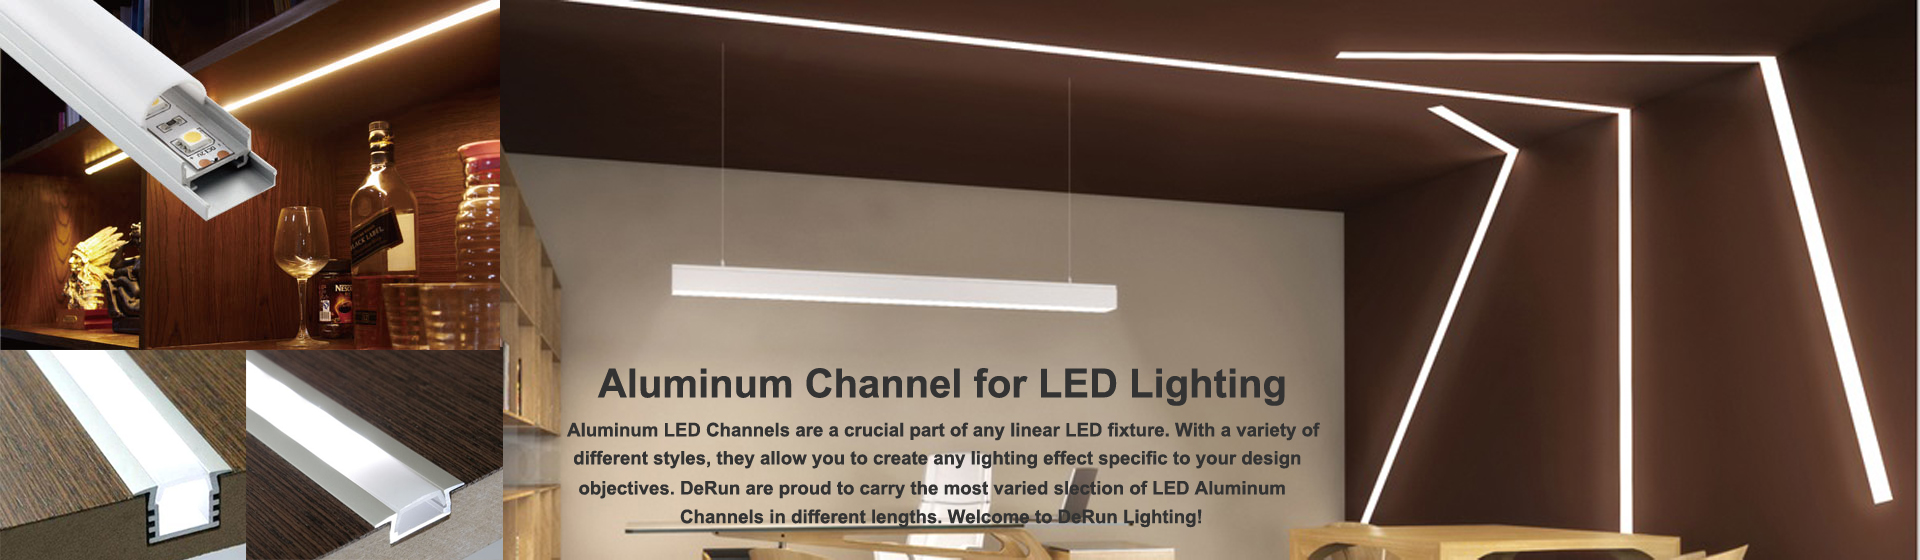 aluminum led channel - LED Linear Lights